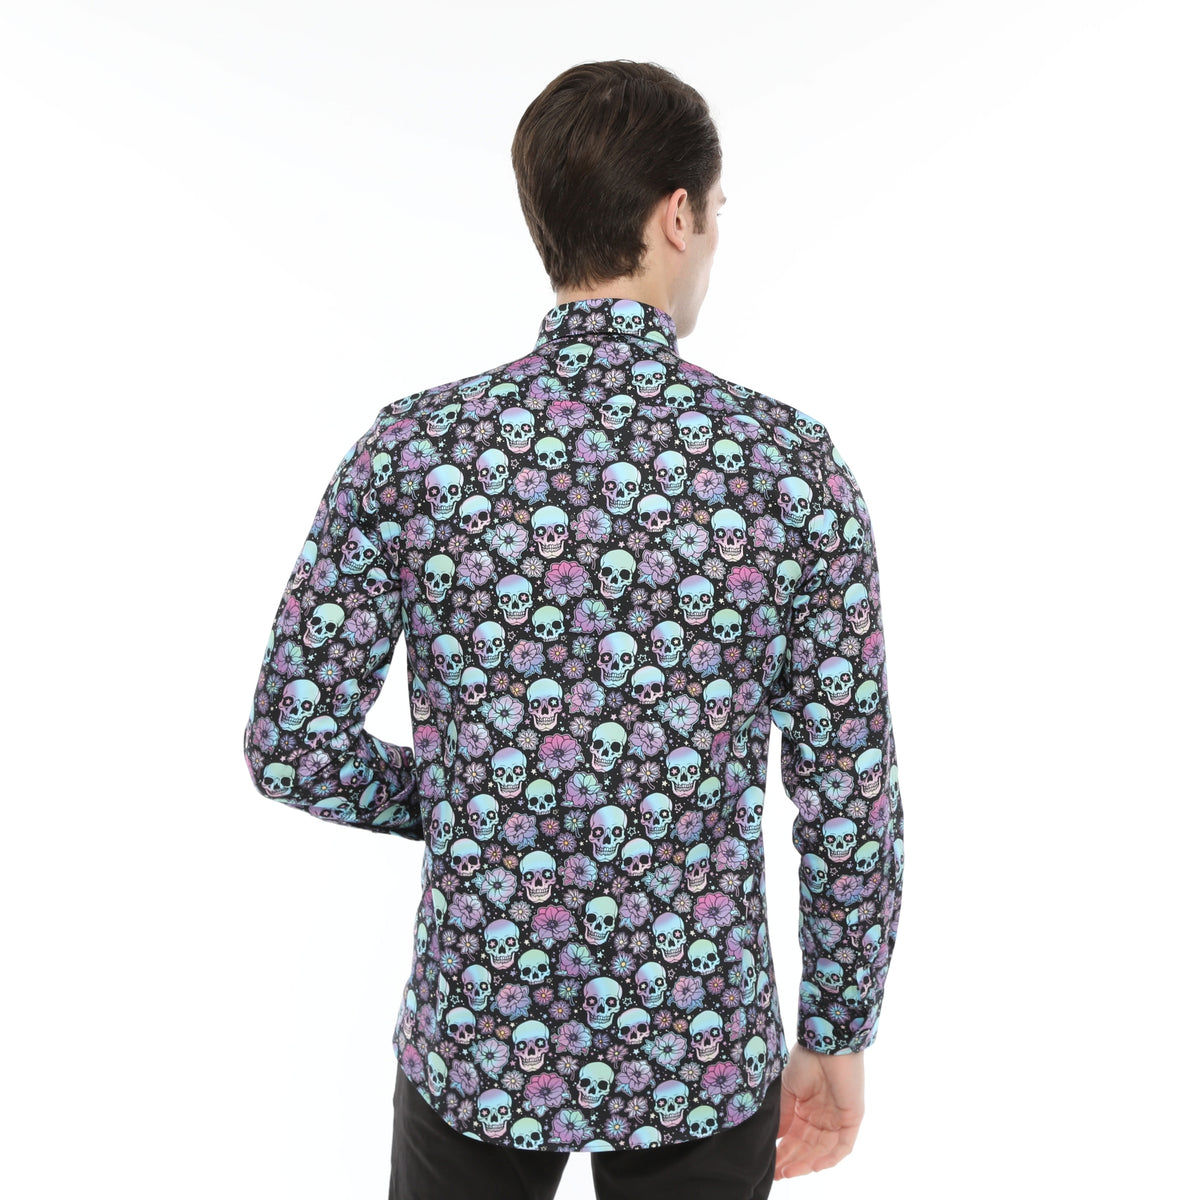 Xact Men's Holographic Skulls & Flower Print Long Sleeved Shirt, Regular Fit, 08, Xsh1208, Holographic Skulls & Flowers